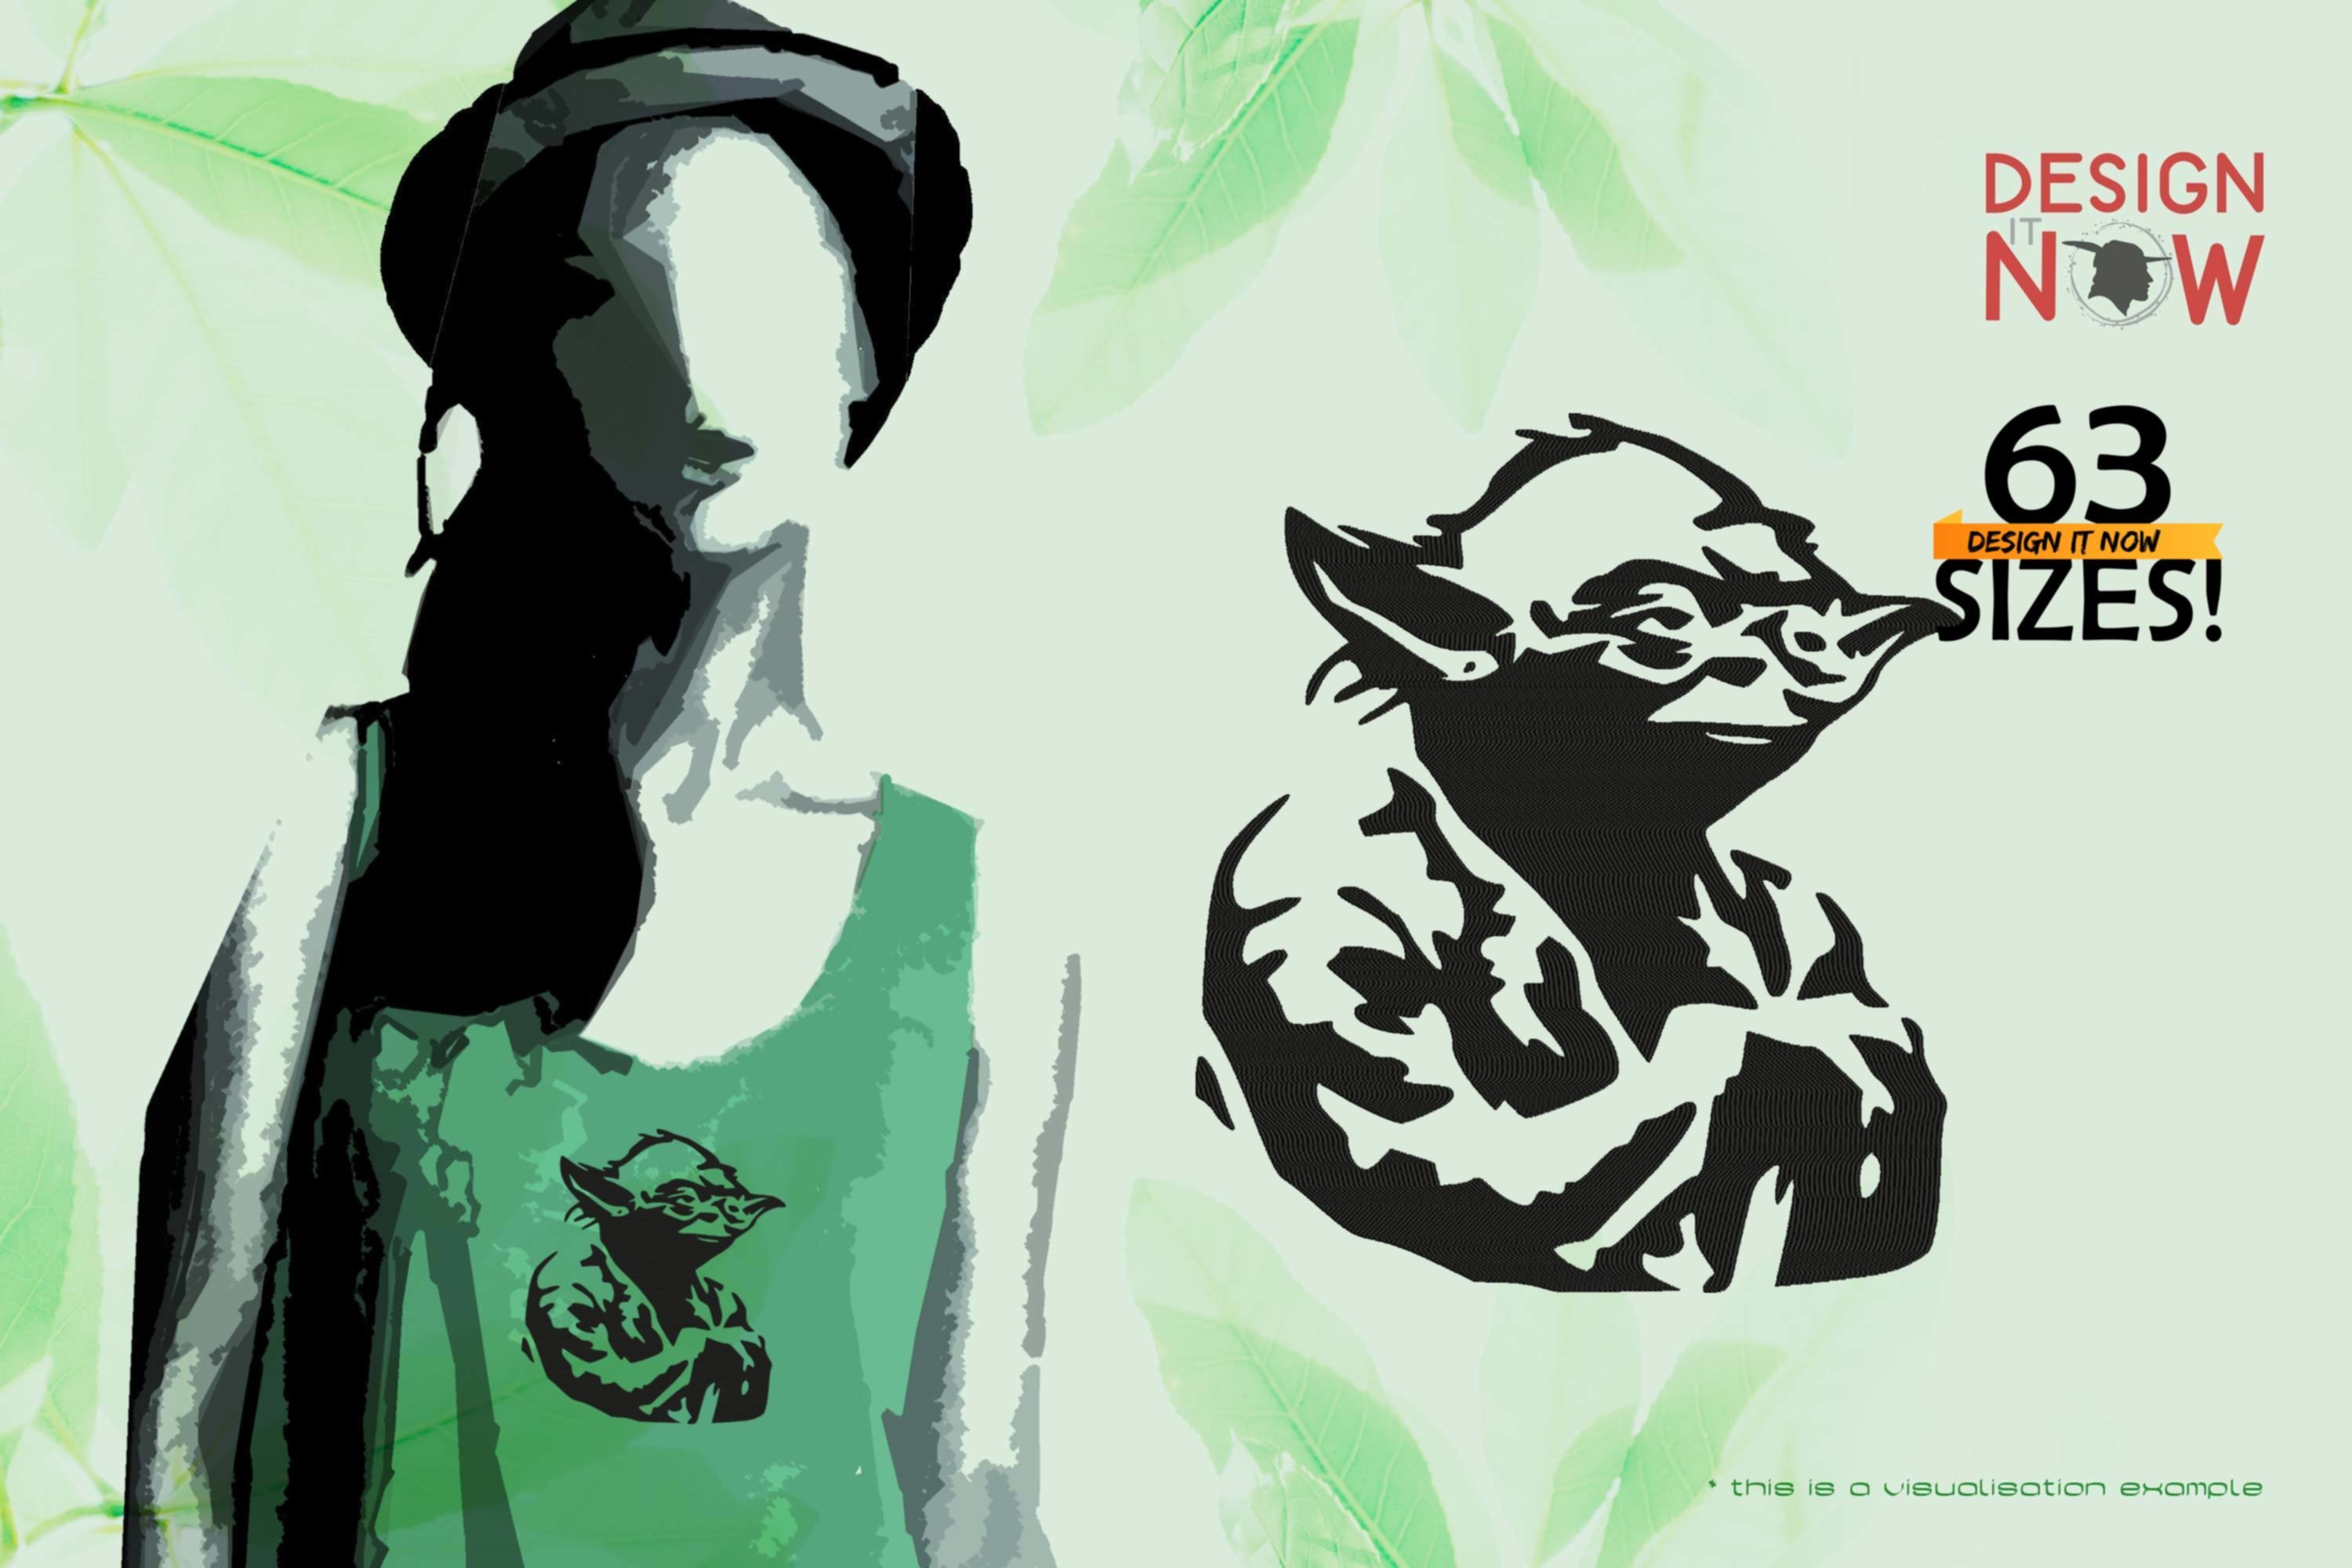  Tribute To Fictional Character Minch Yoda aka Yoda (Side View)